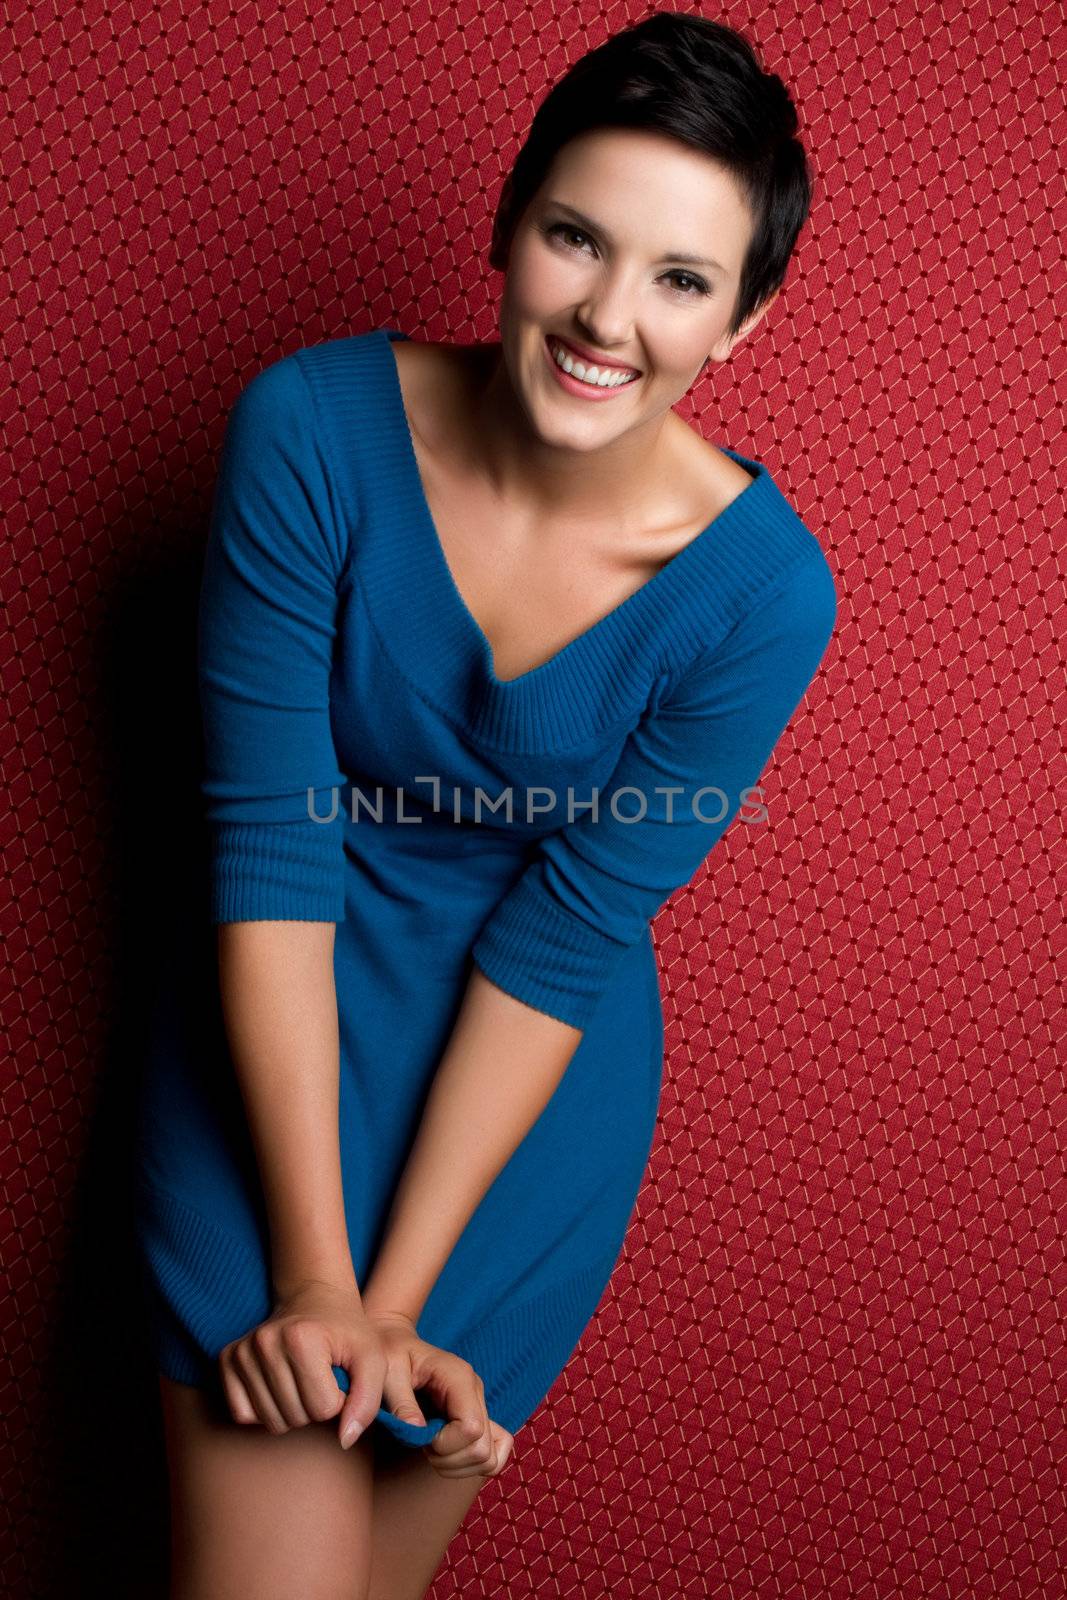 Smiling woman wearing blue dress